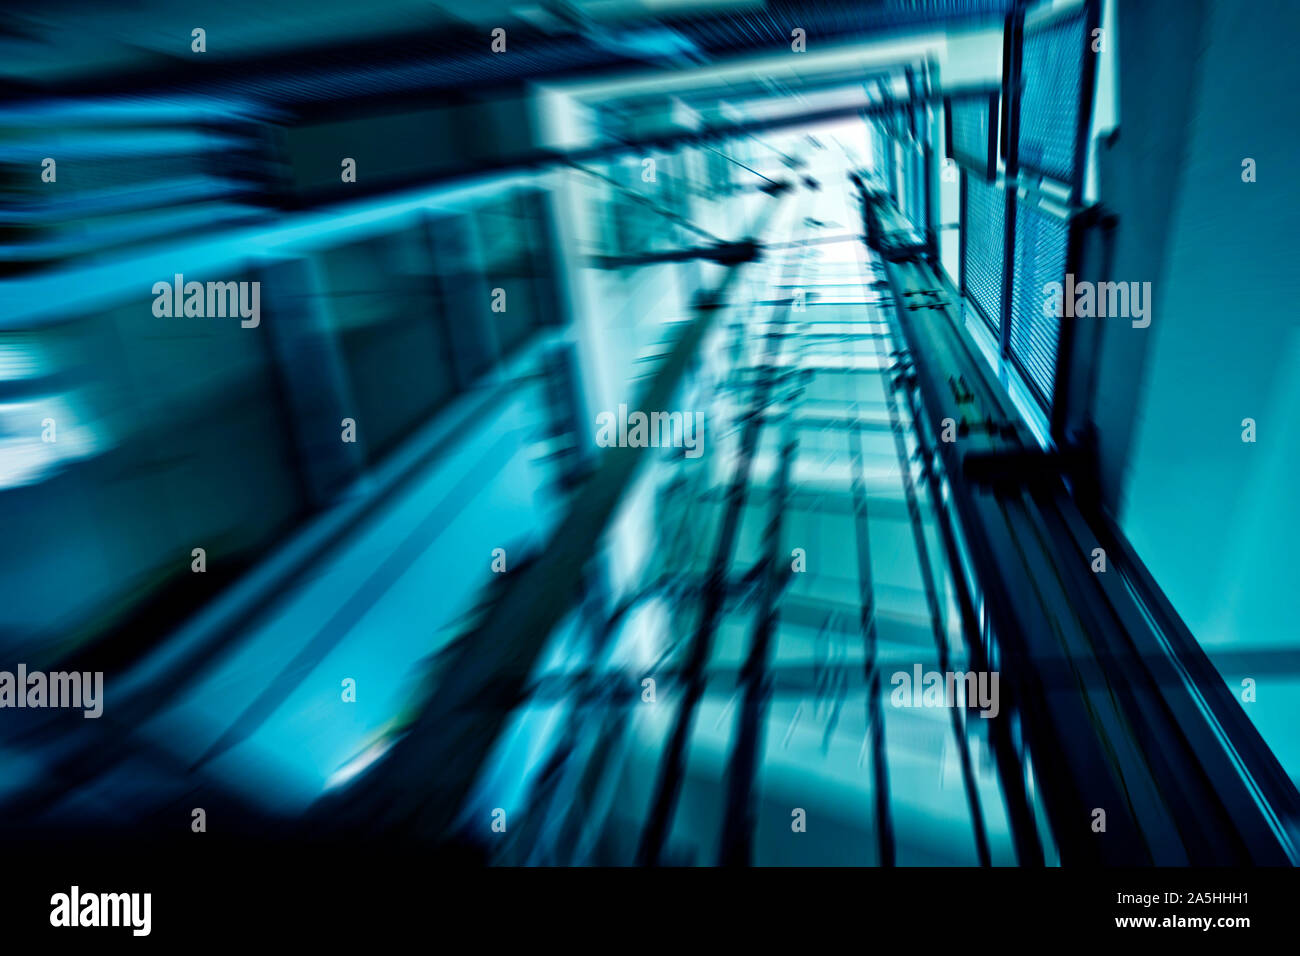 escalator shaft with motion blur effect Stock Photo